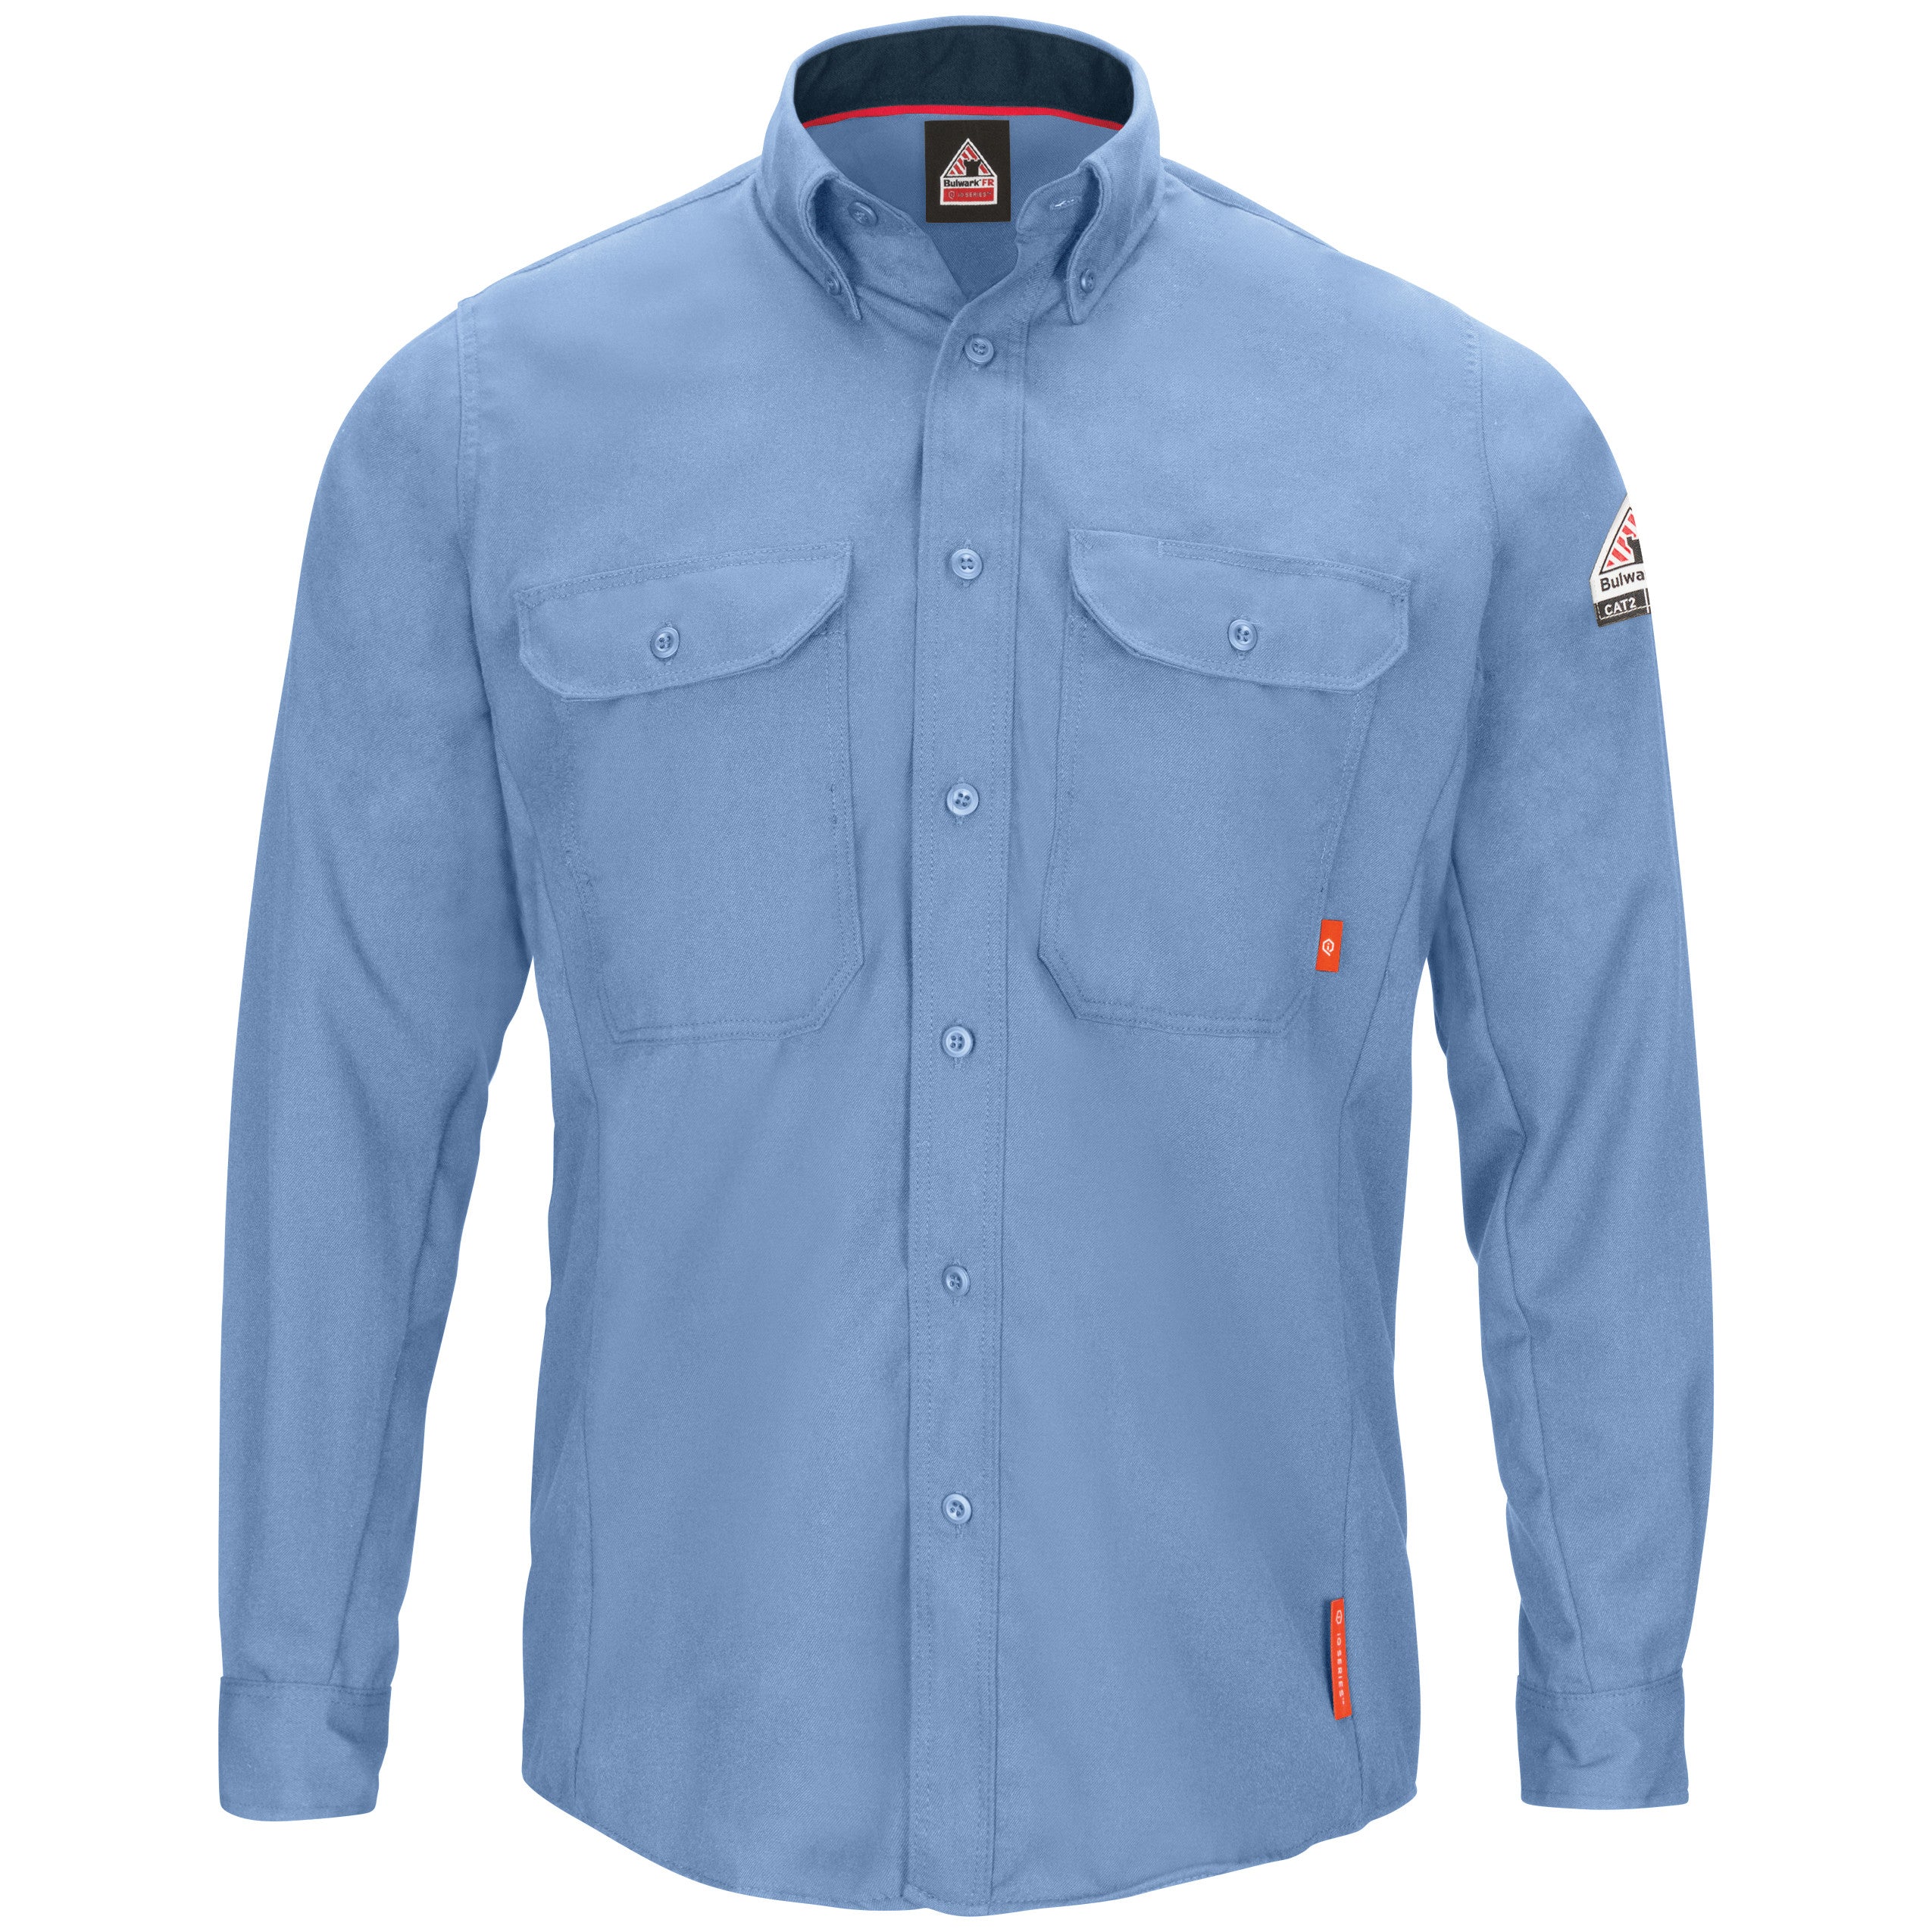 iQ Series® Men's Lightweight Comfort Woven Shirt with Insect Shield QS52 - Light Blue-eSafety Supplies, Inc